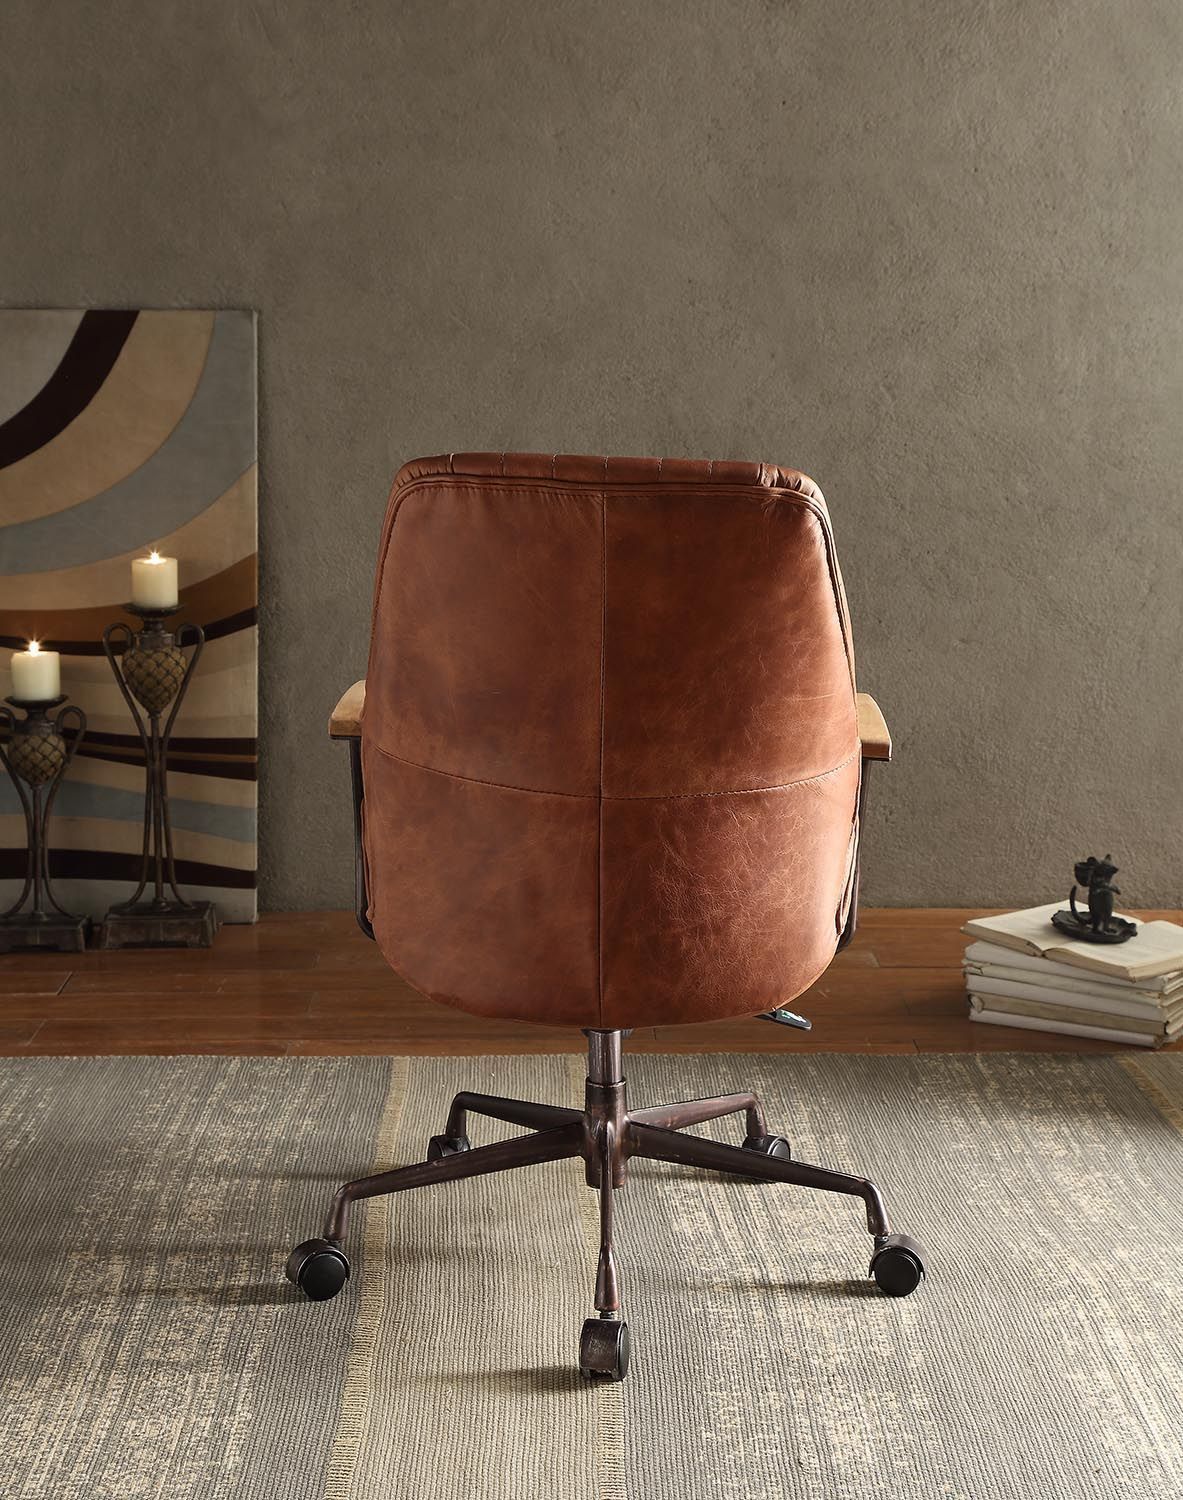 ACME Hamilton Office Chair in Cocoa Top Grain Leather 92413